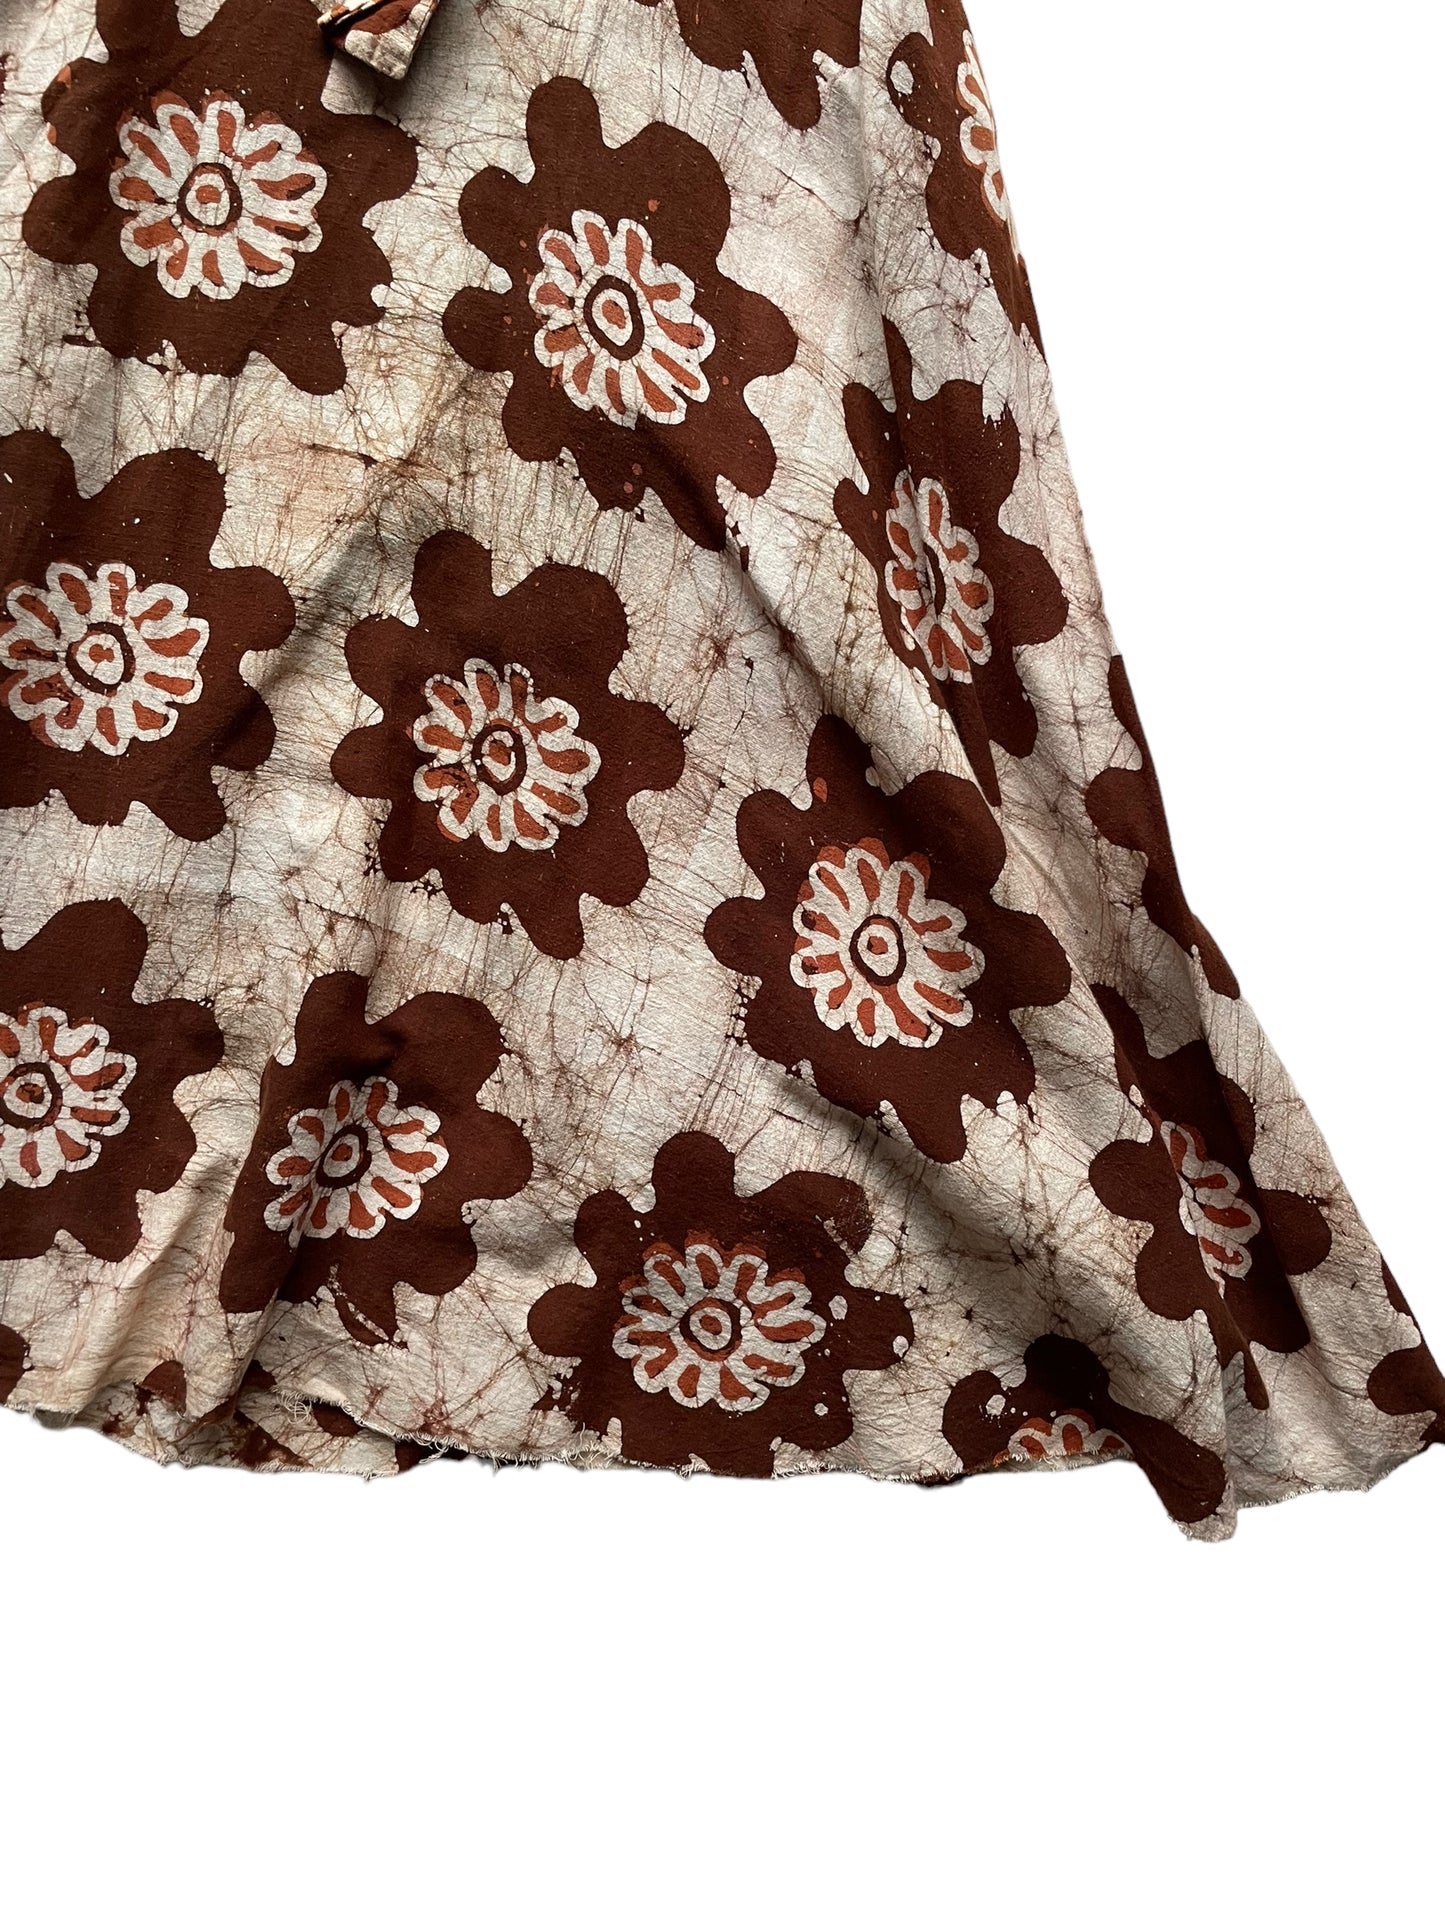 Bottom skirt view of Vintage 1970s Indian Cotton Batik Wrap Skirt